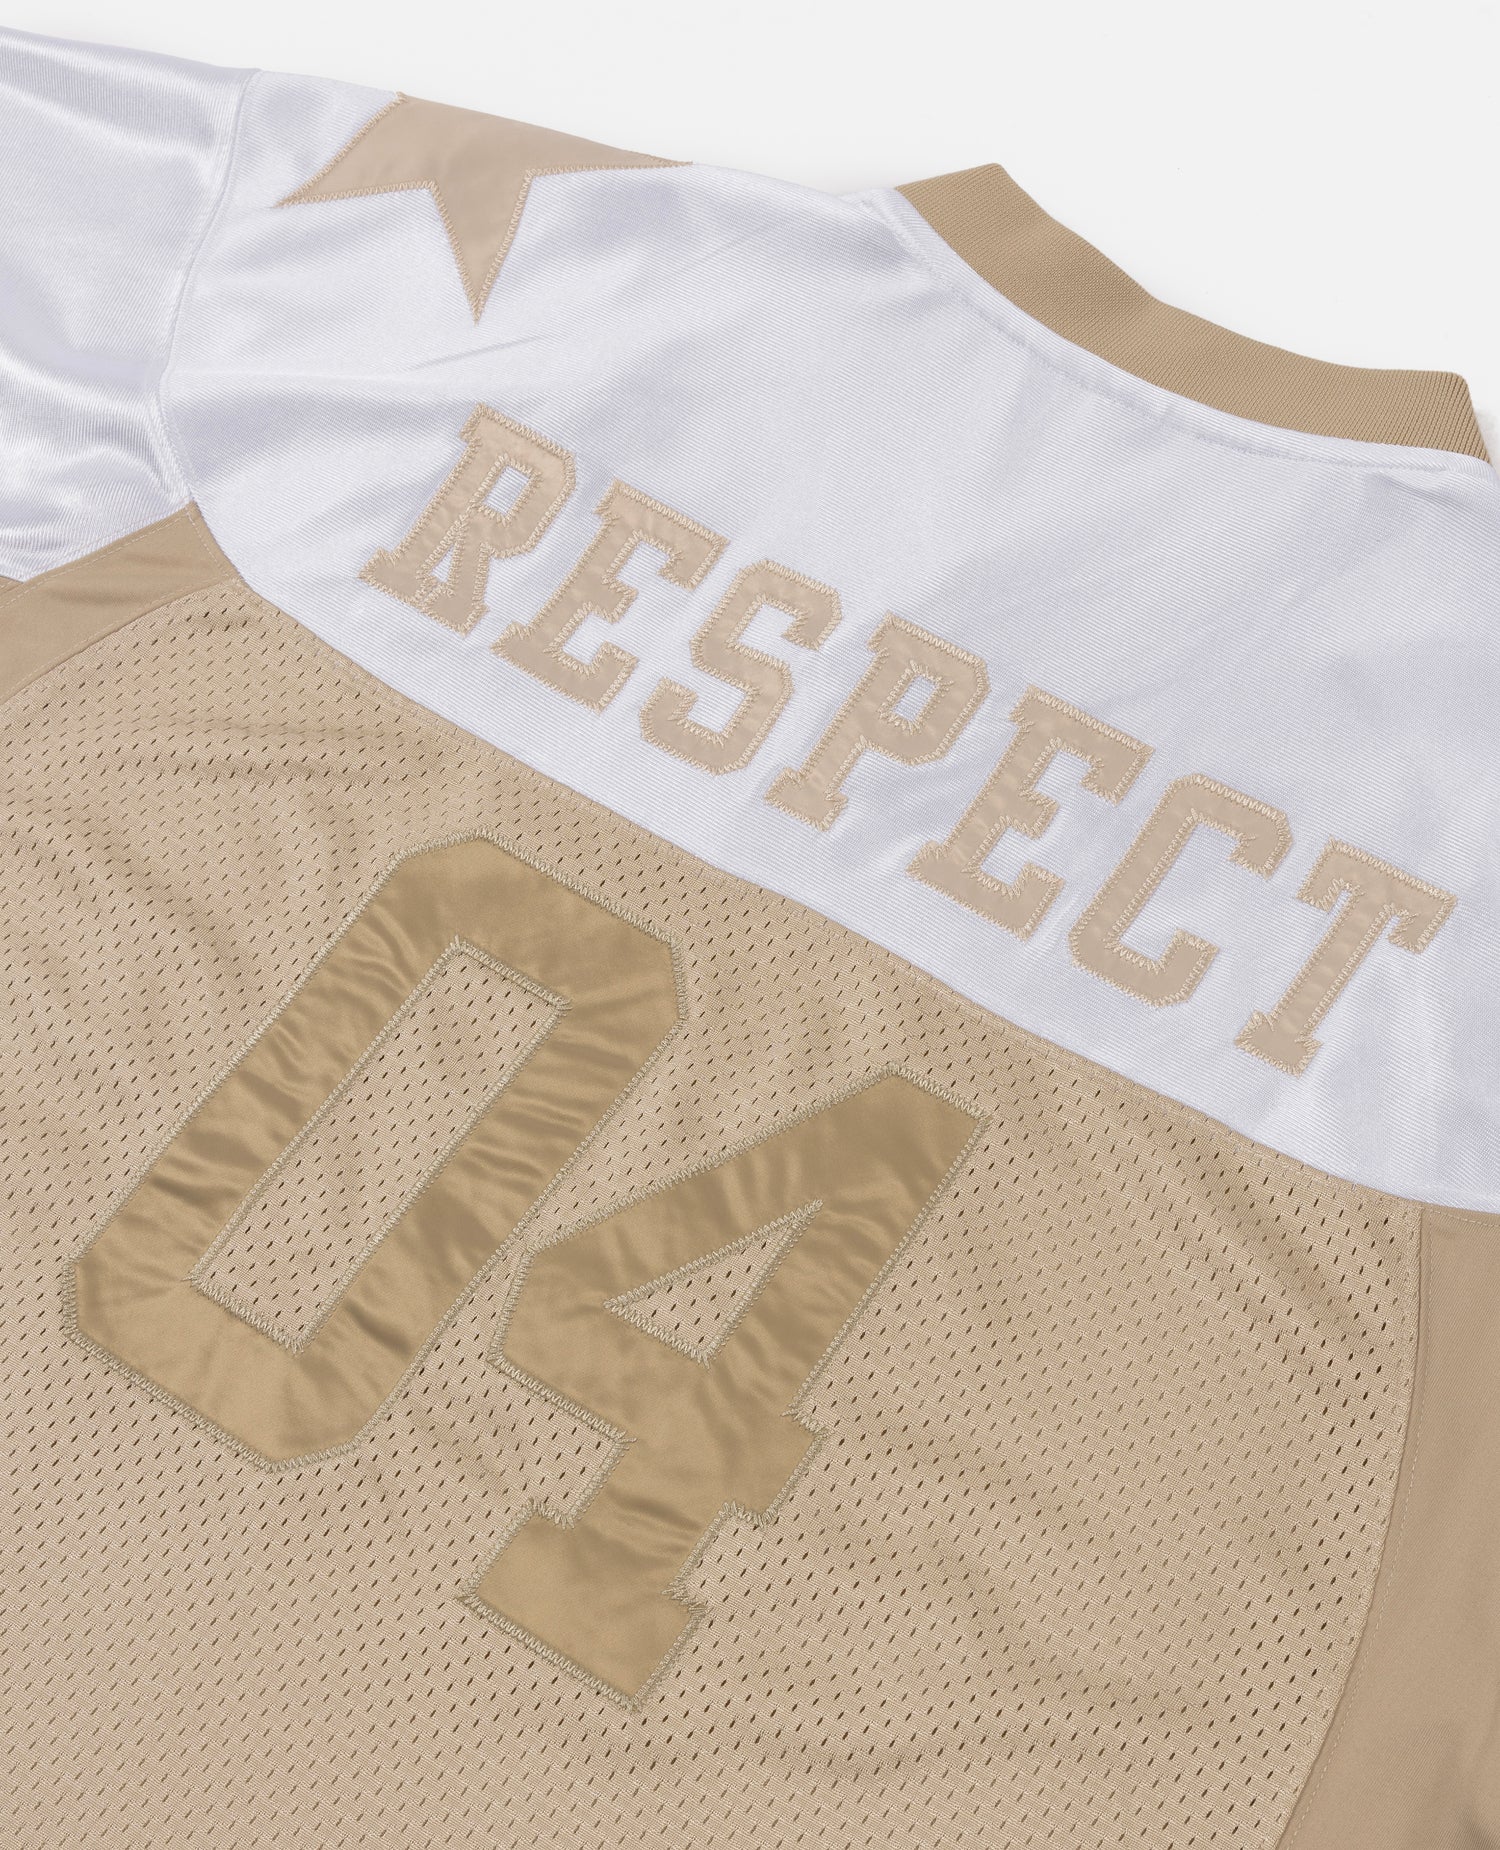 Patta Respect Football Jersey (Cement/White)